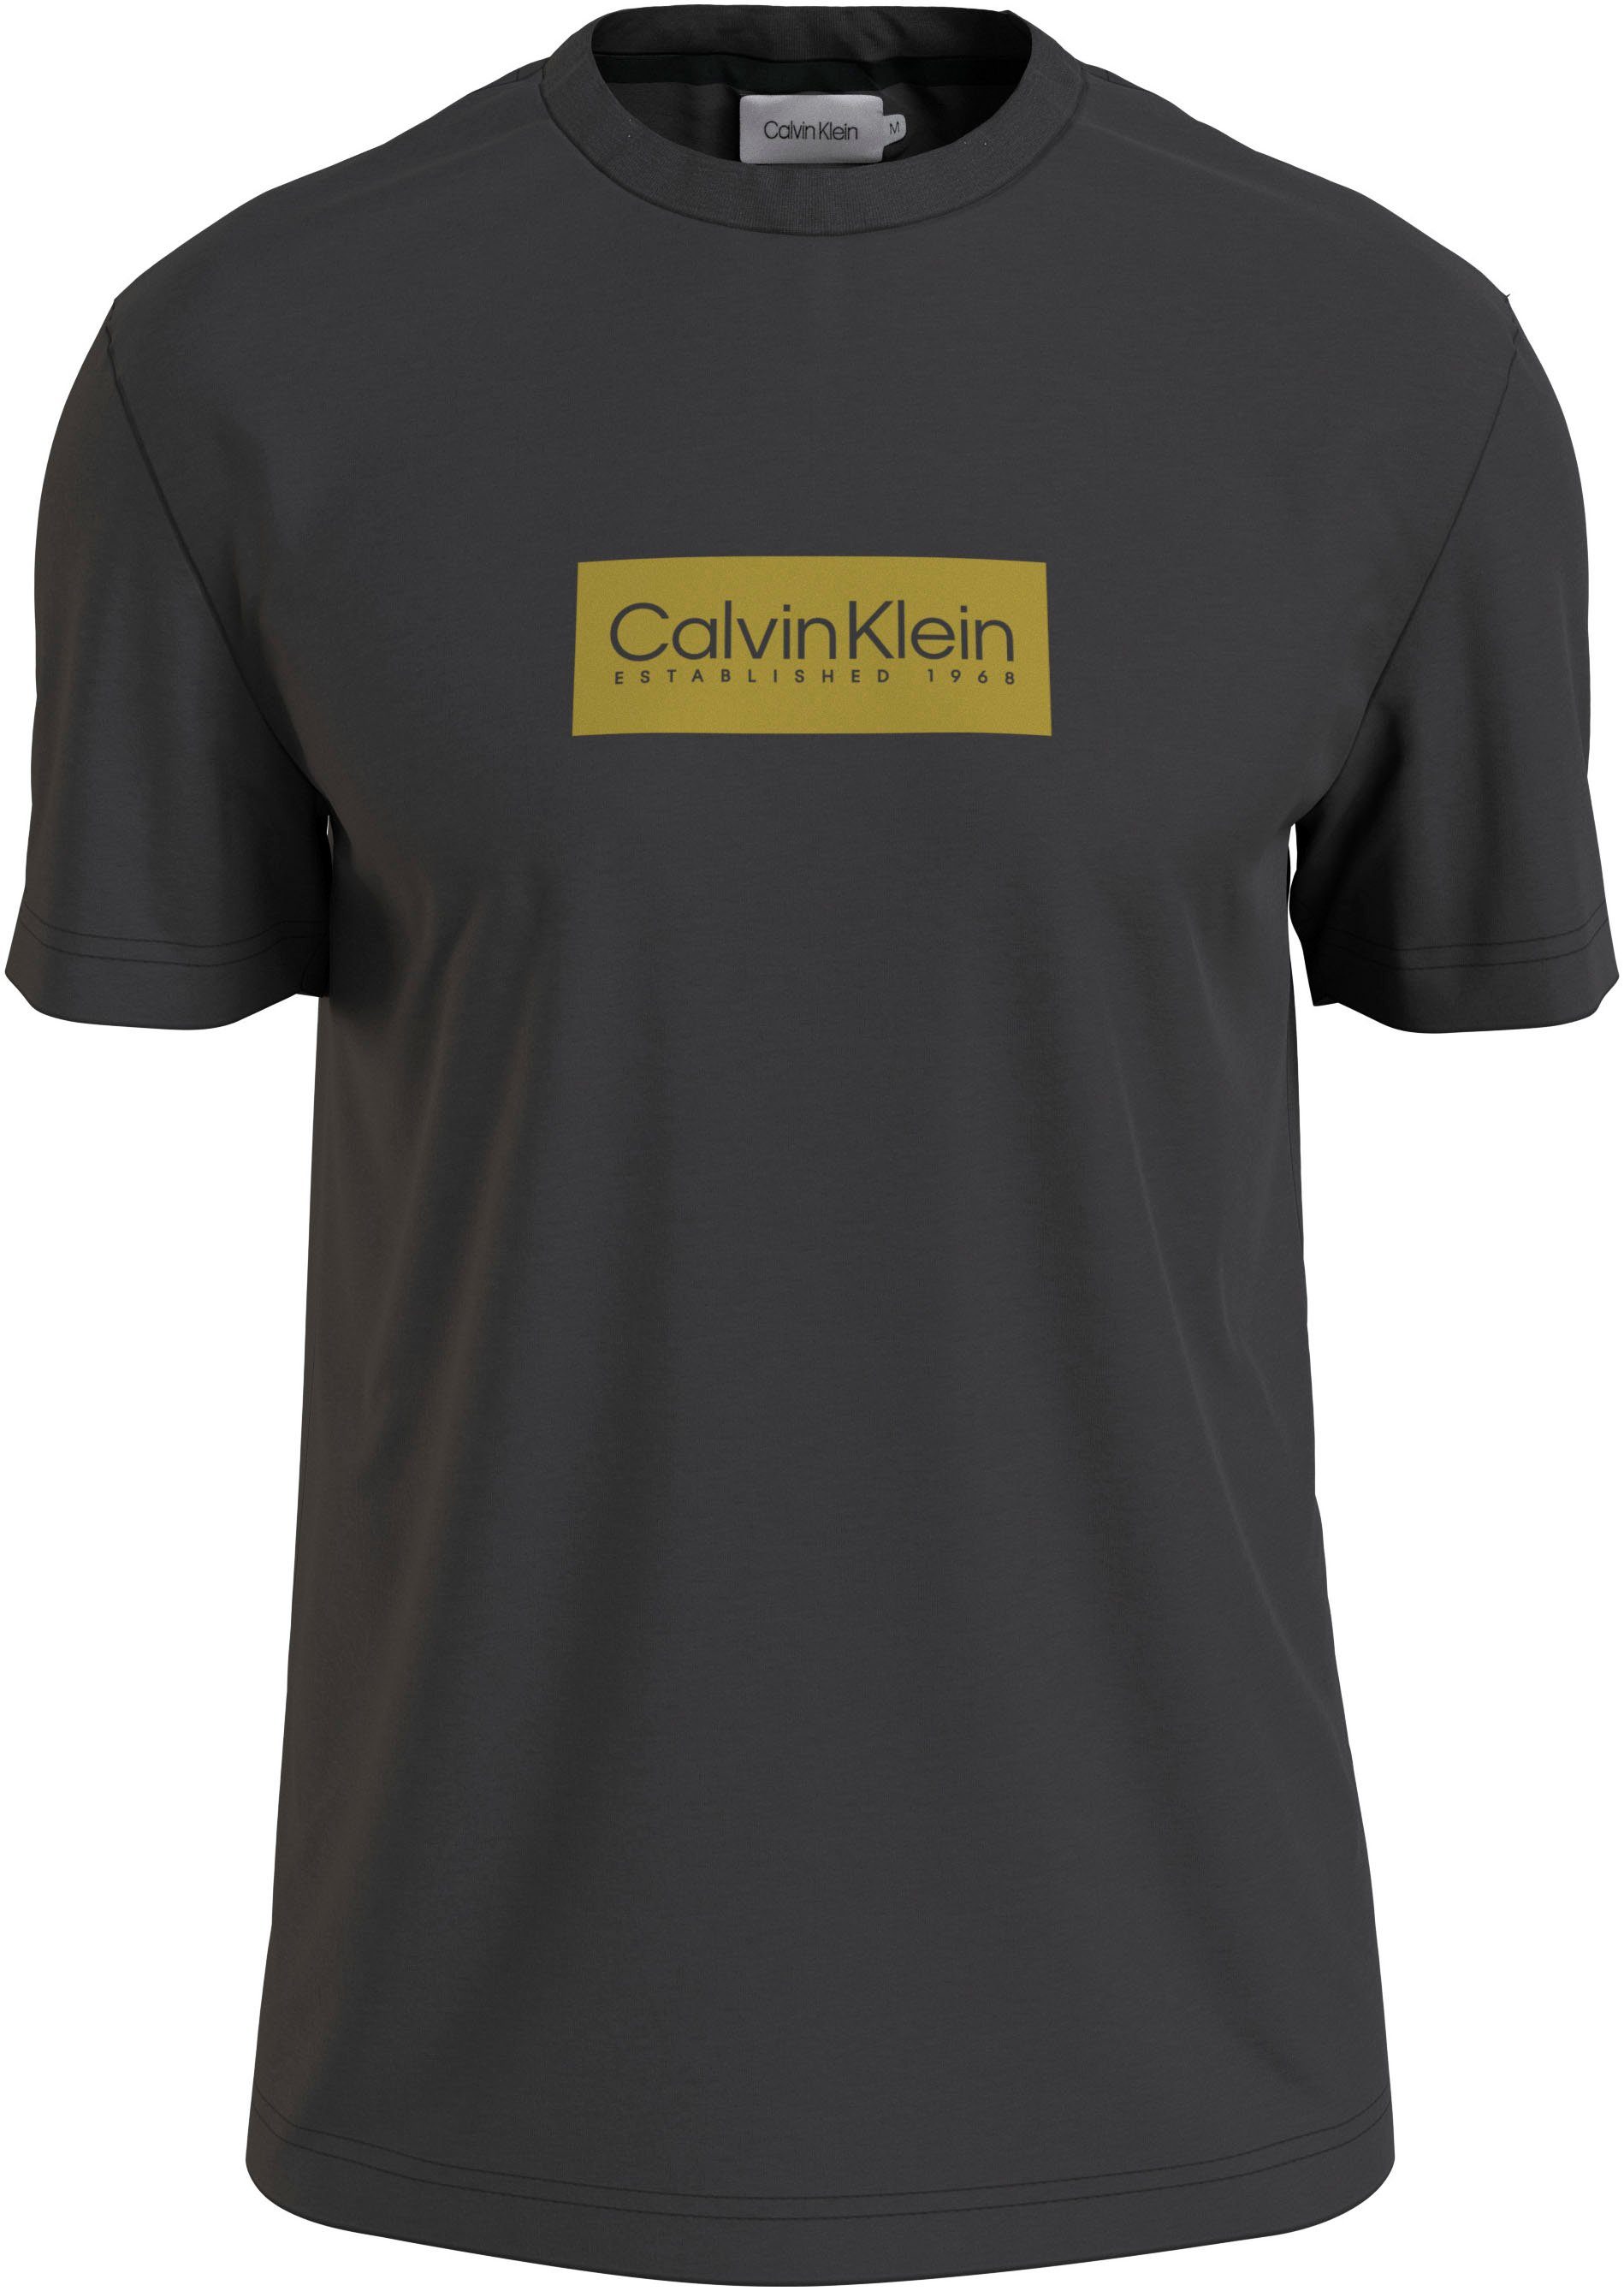 Ck BT_RAISED T-Shirt Klein Black LOGO Big&Tall T-SHIRT RUBBER Calvin